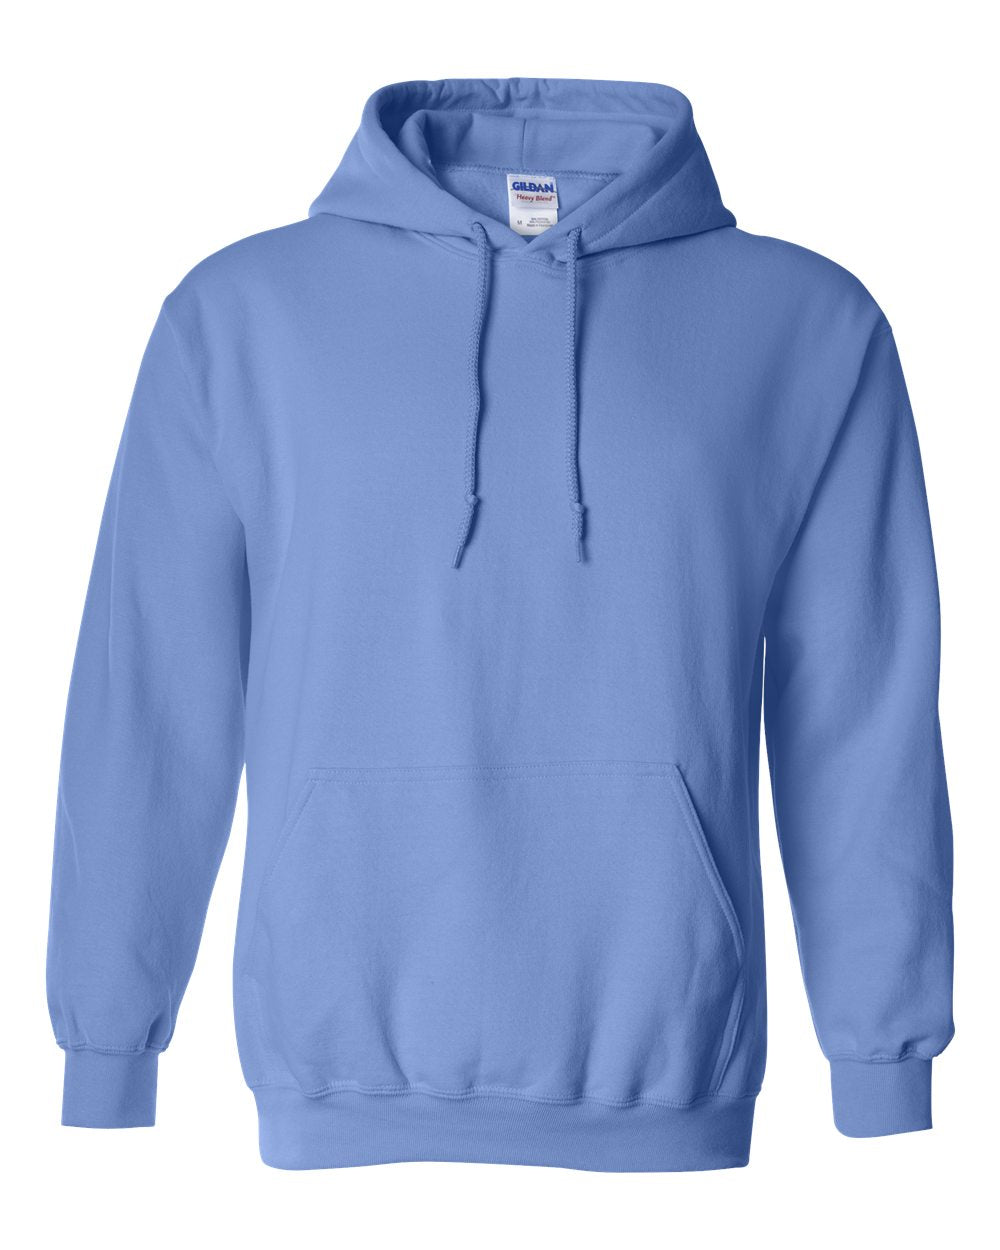 RBA Design Hoodie Unisex Sweater